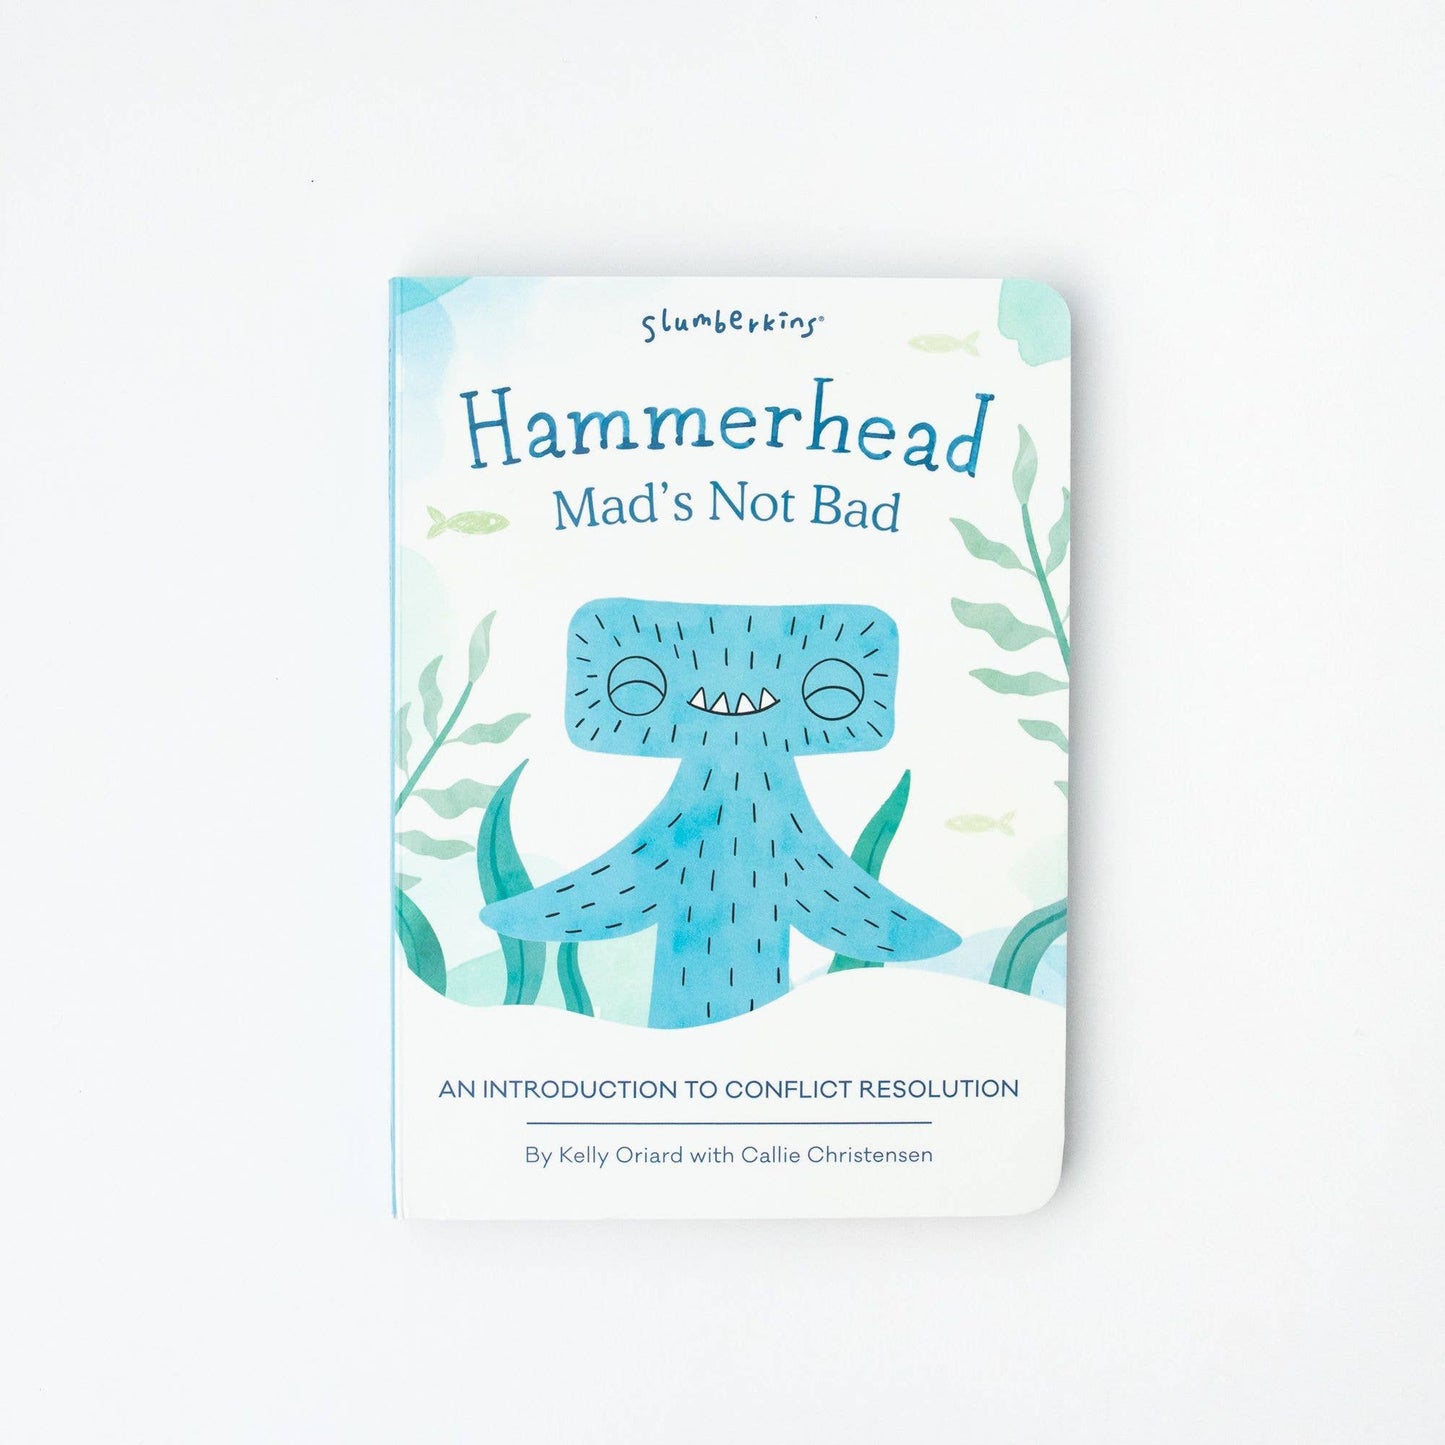 Hammerhead Snuggler + Intro Book - Conflict Resolution